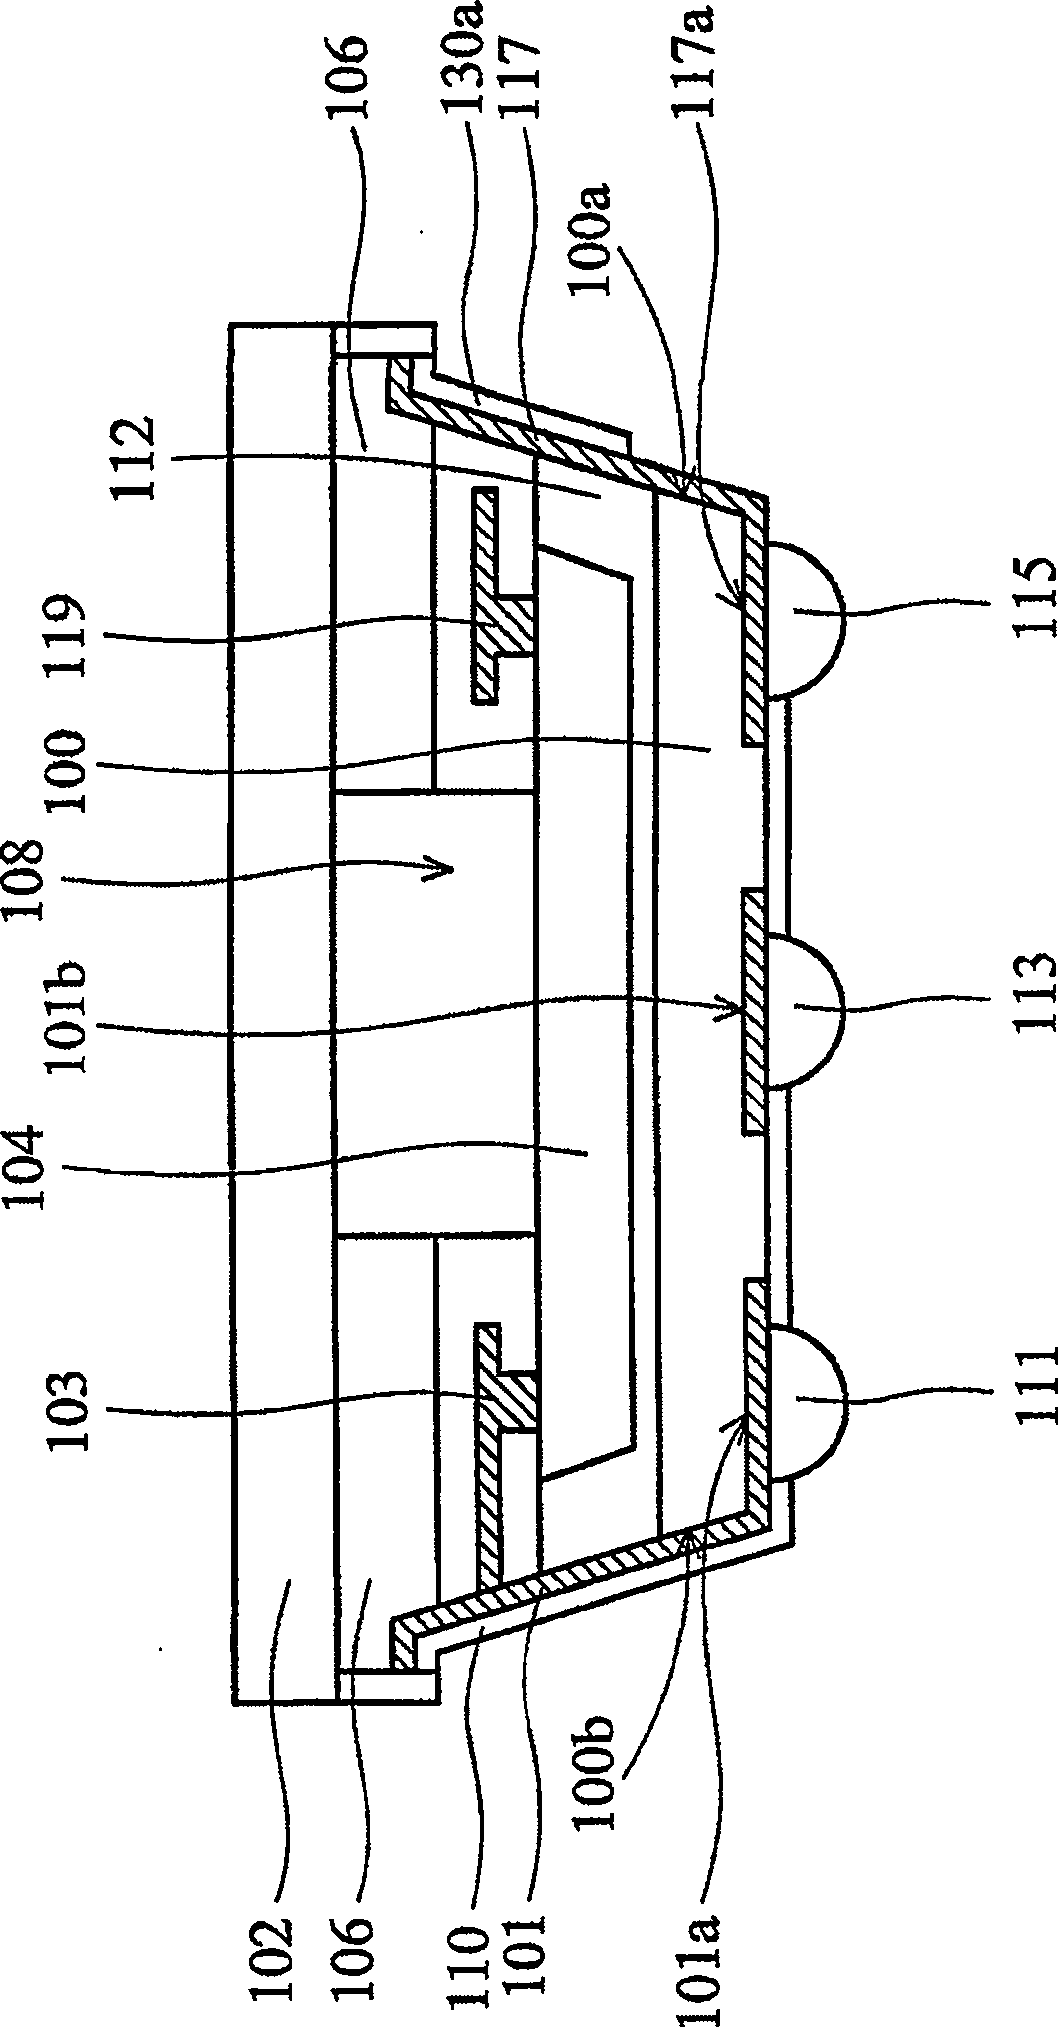 Image sensor device and fabrication method thereof